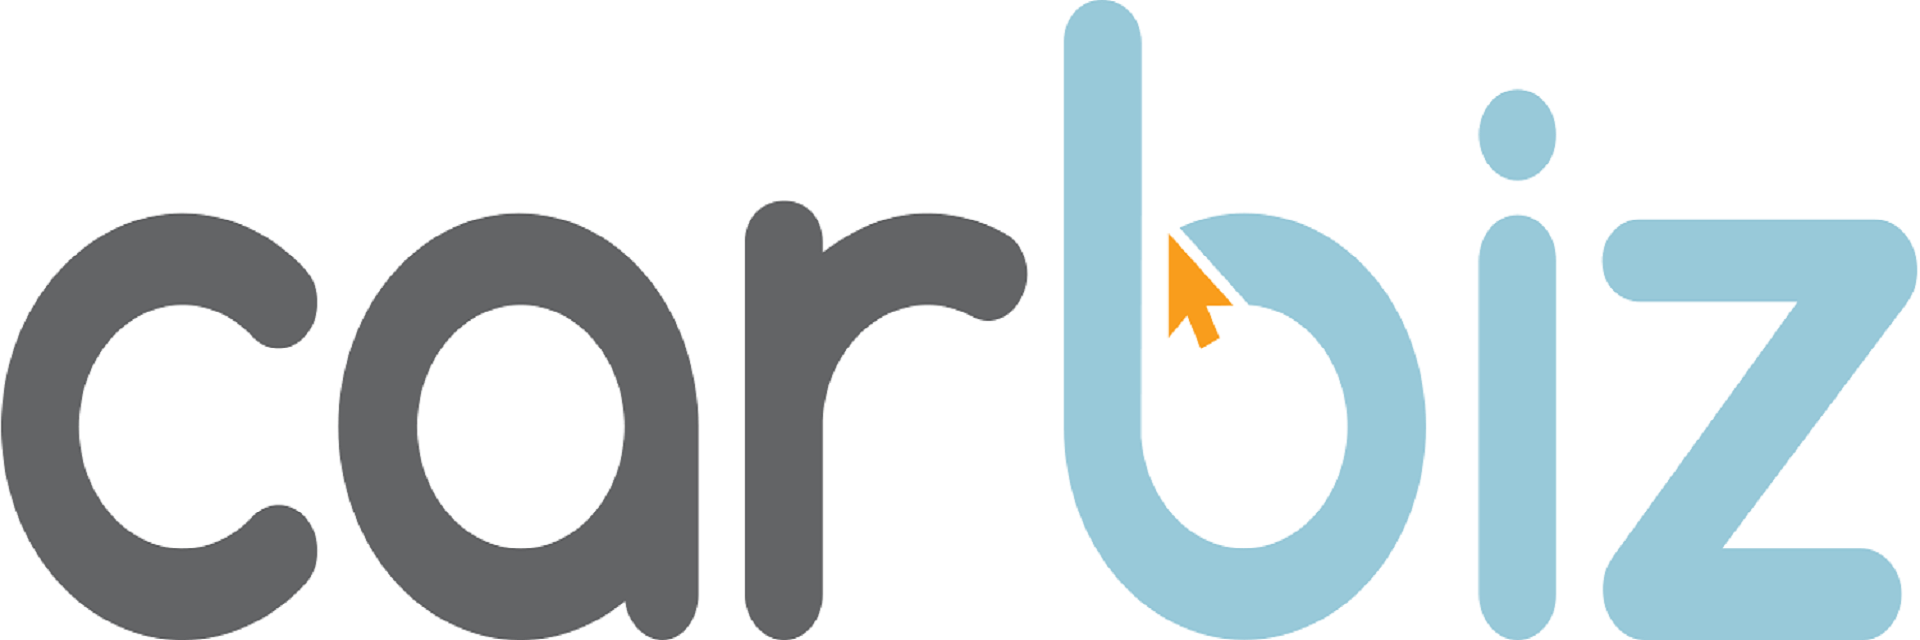 Carbiz, Ltd. Company Logo